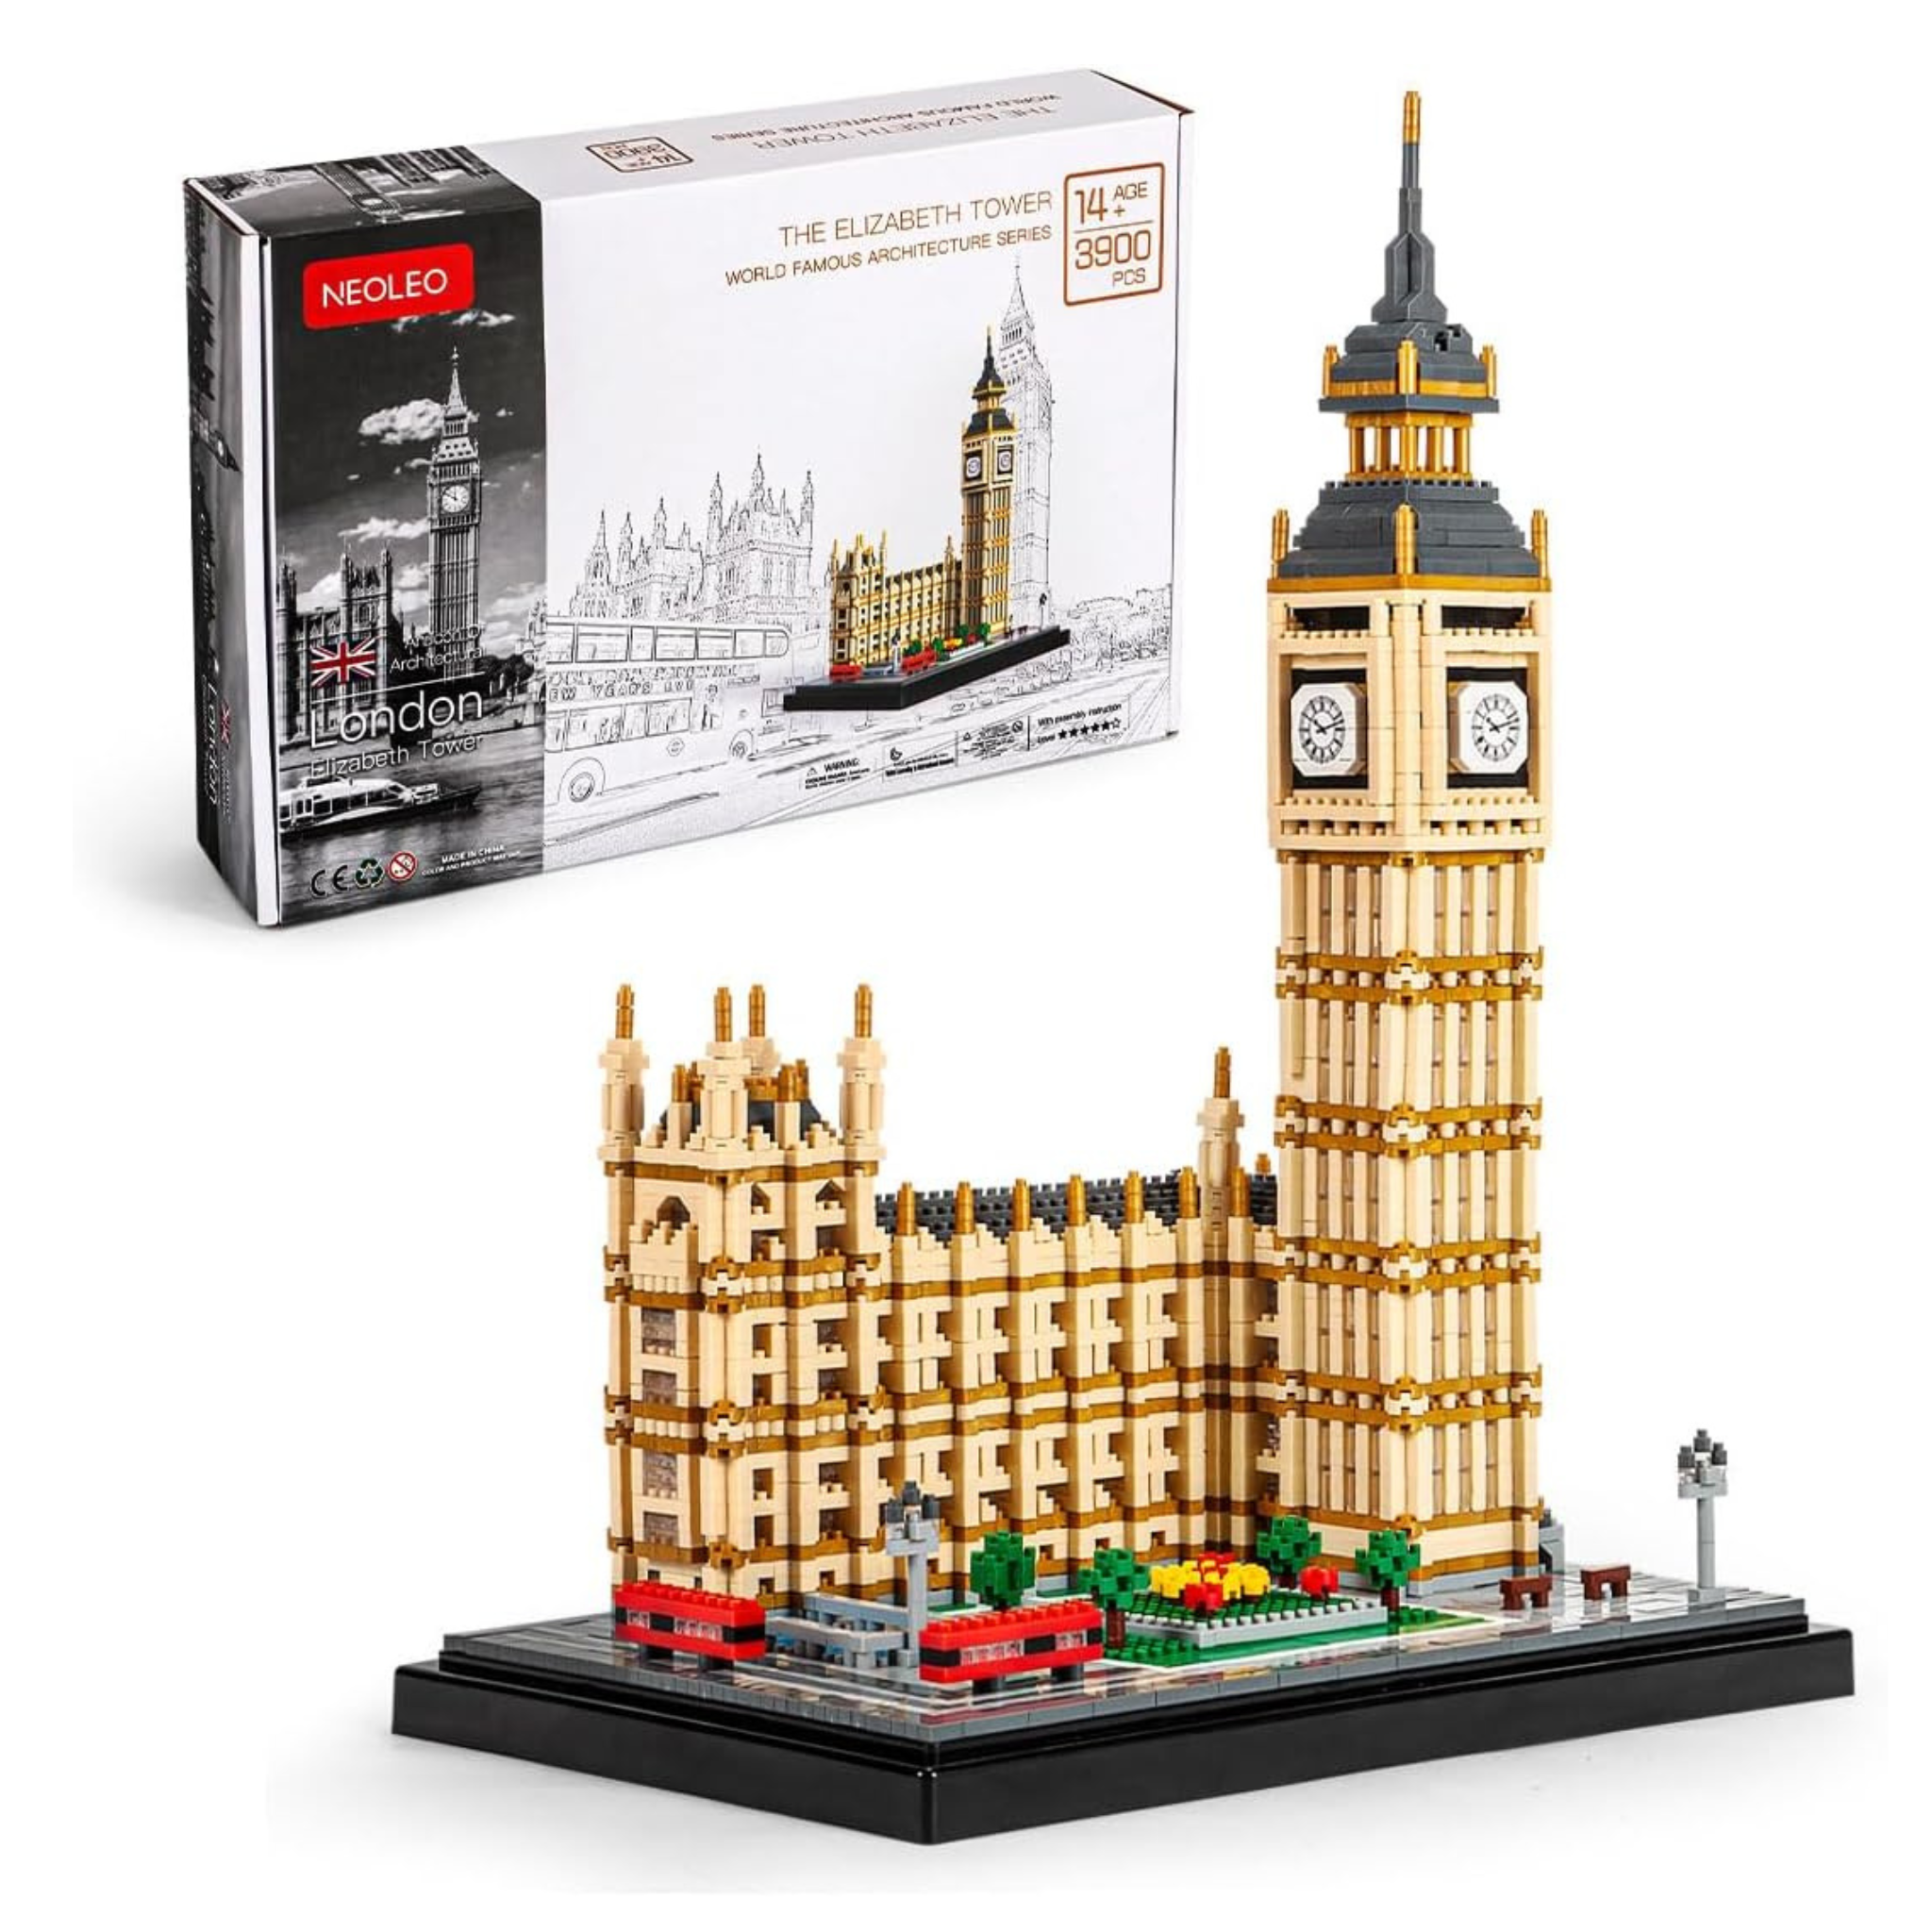 3,900+ Piece Real Big Ben Micro Building Blocks Set